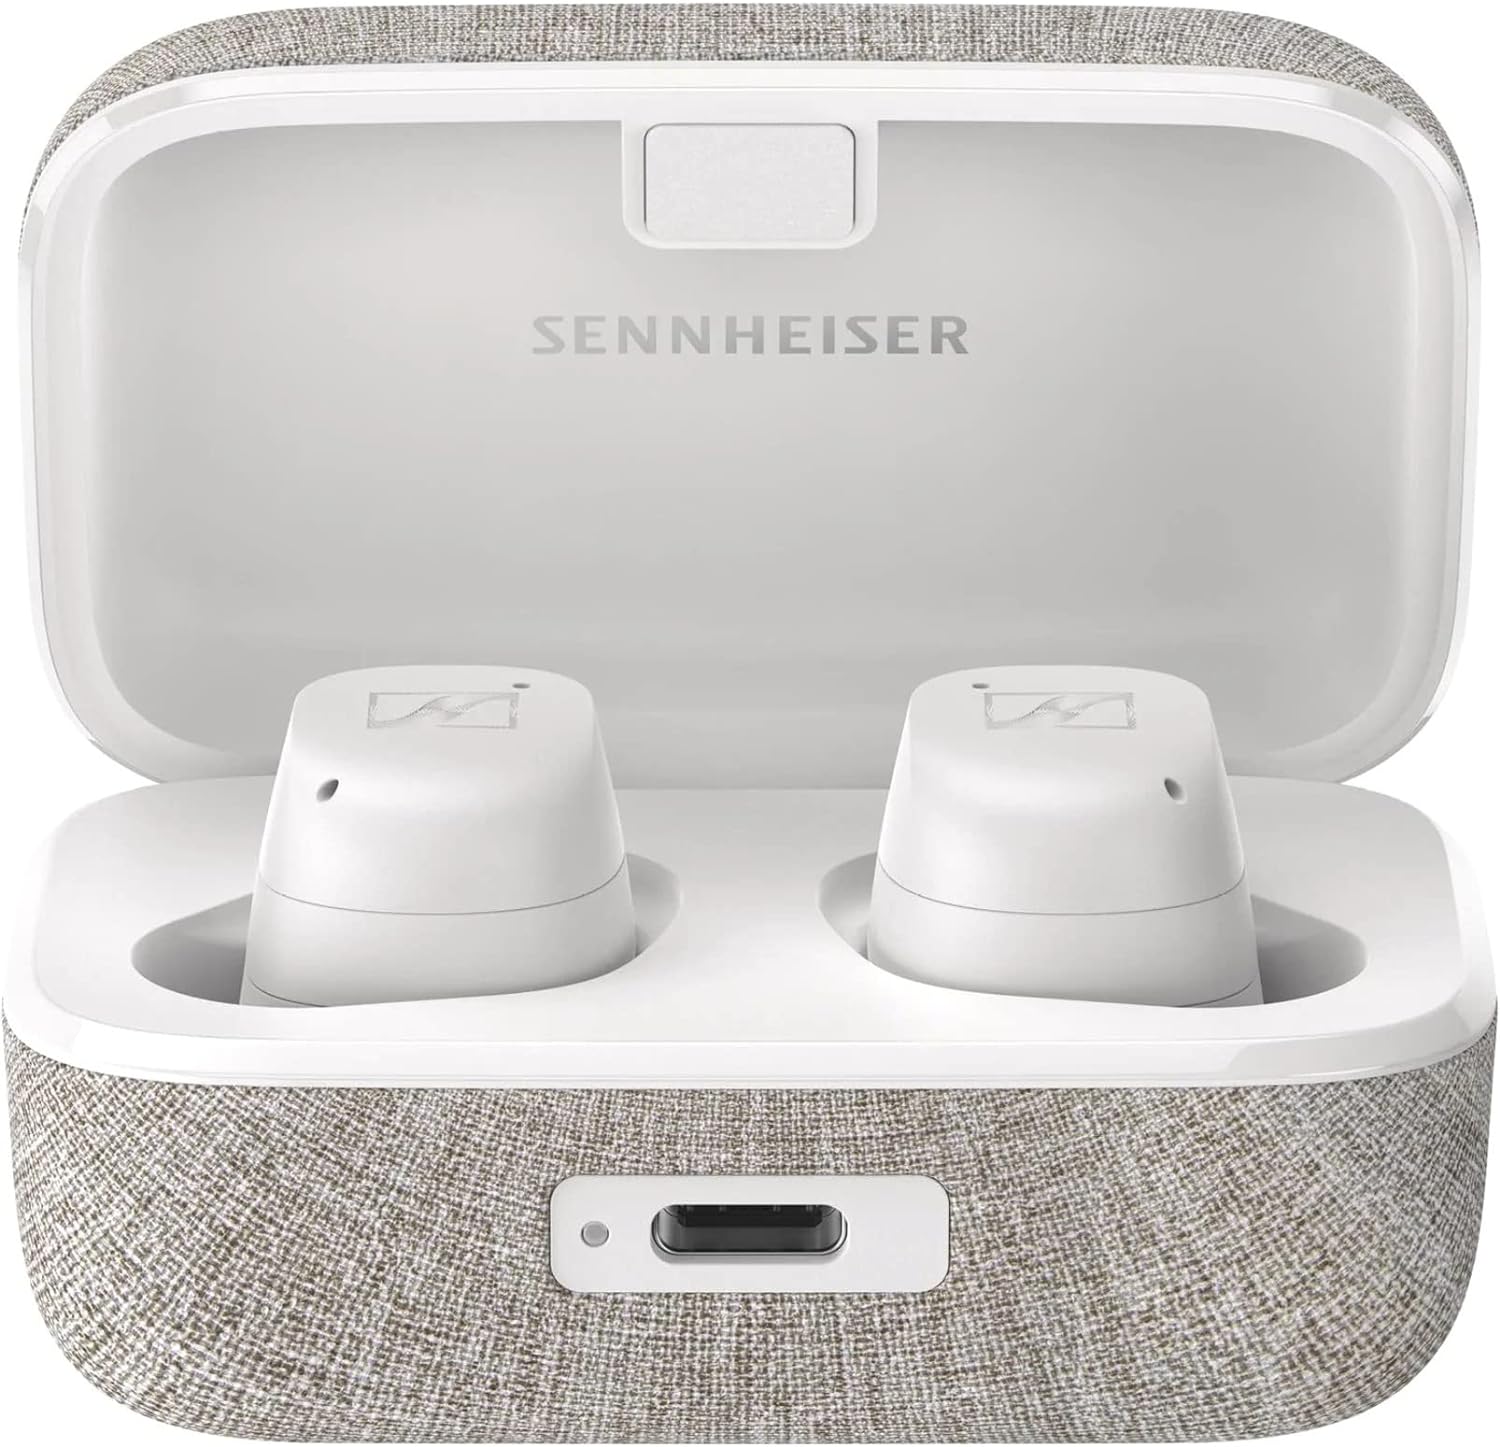 Sennheiser MOMENTUM True Wireless 3 Bluetooth Earbuds (White) $120 + Free Shipping w/ Amazon Prime